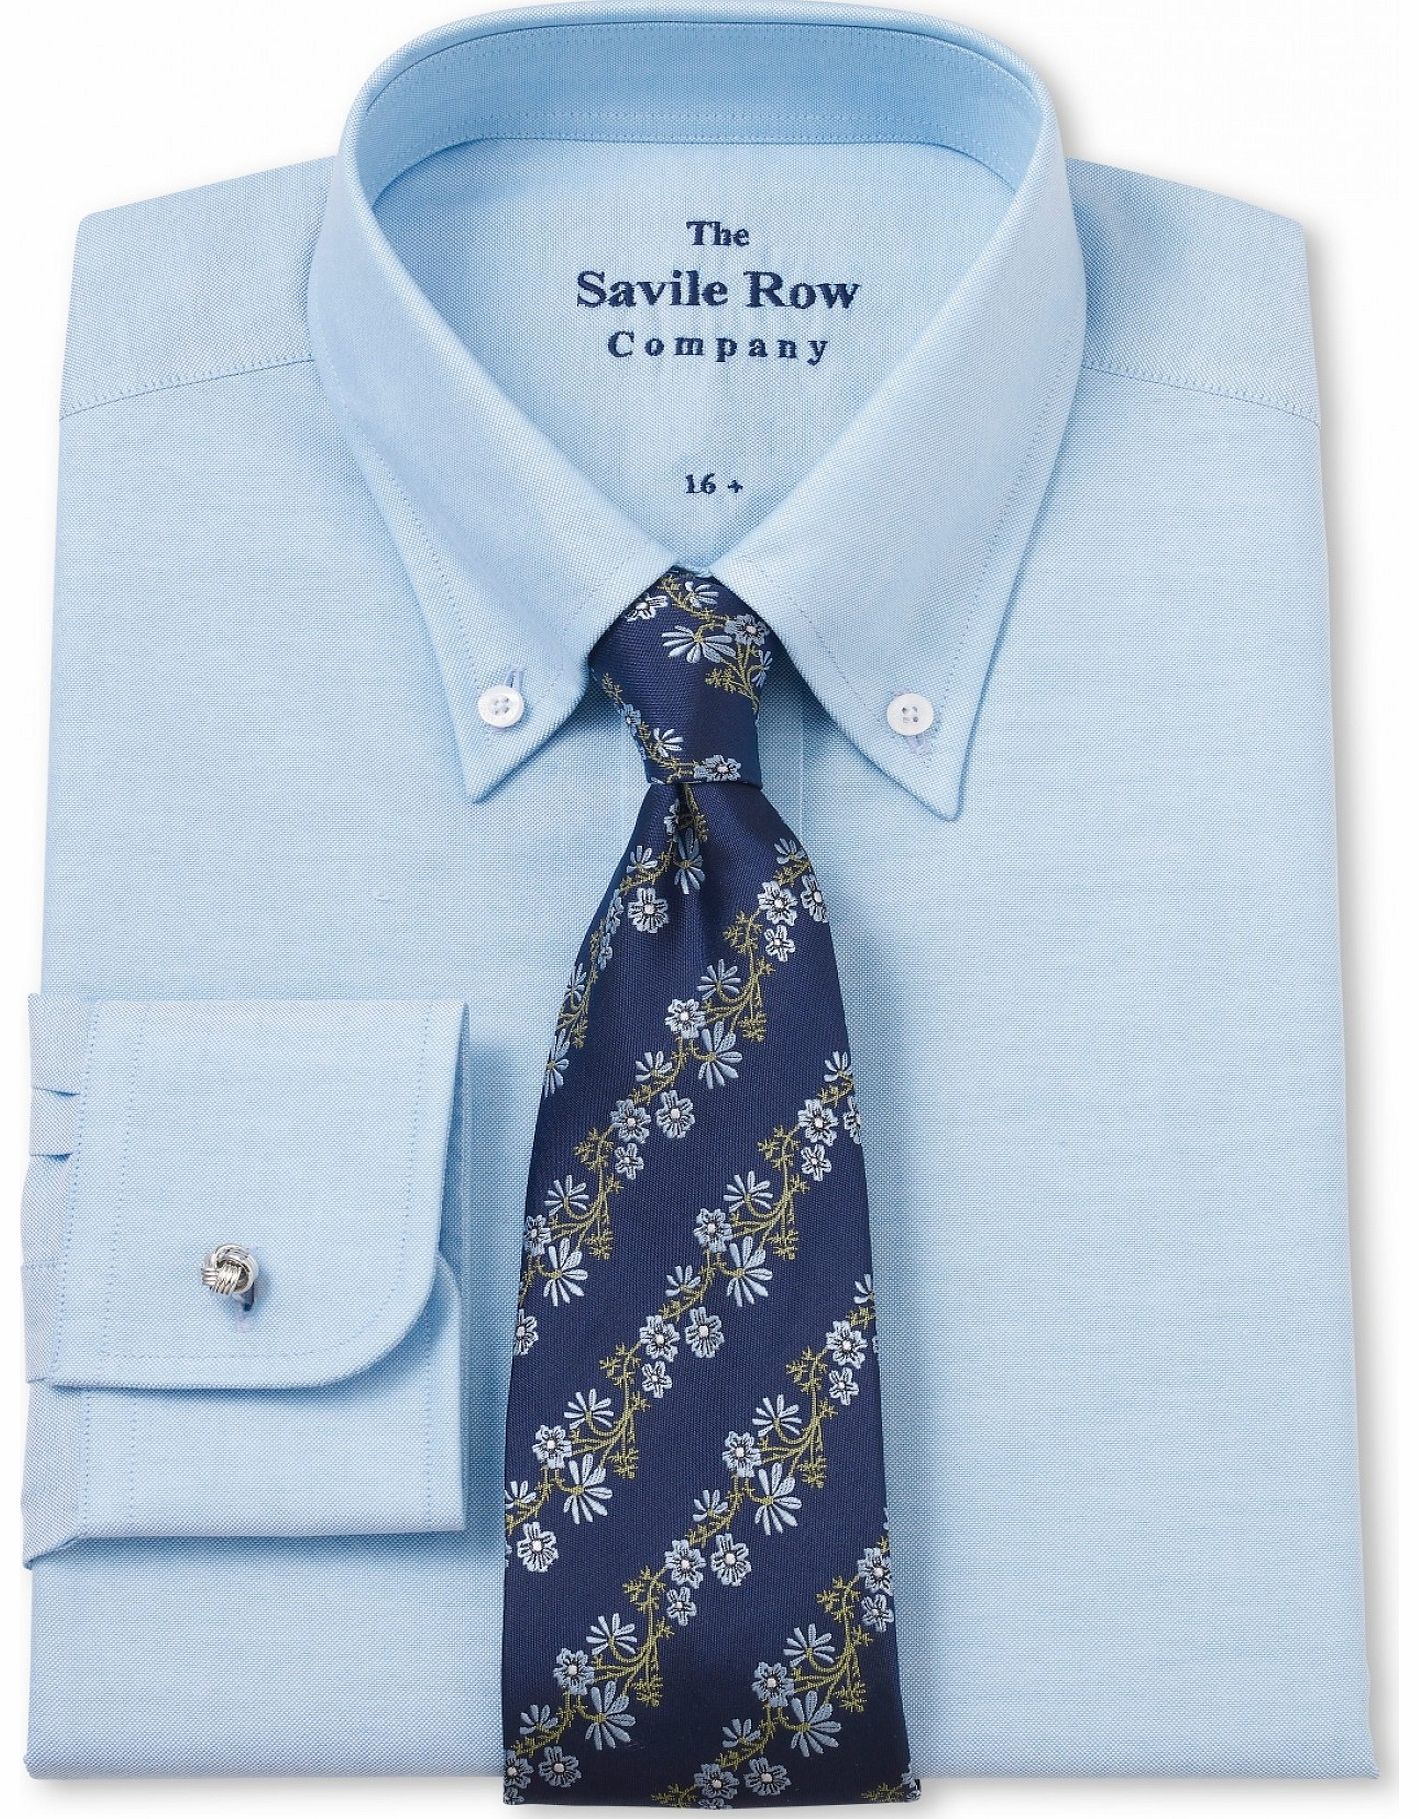 Savile Row Company Blue Oxford Button Down Slim Fit Shirt 16 1/2``